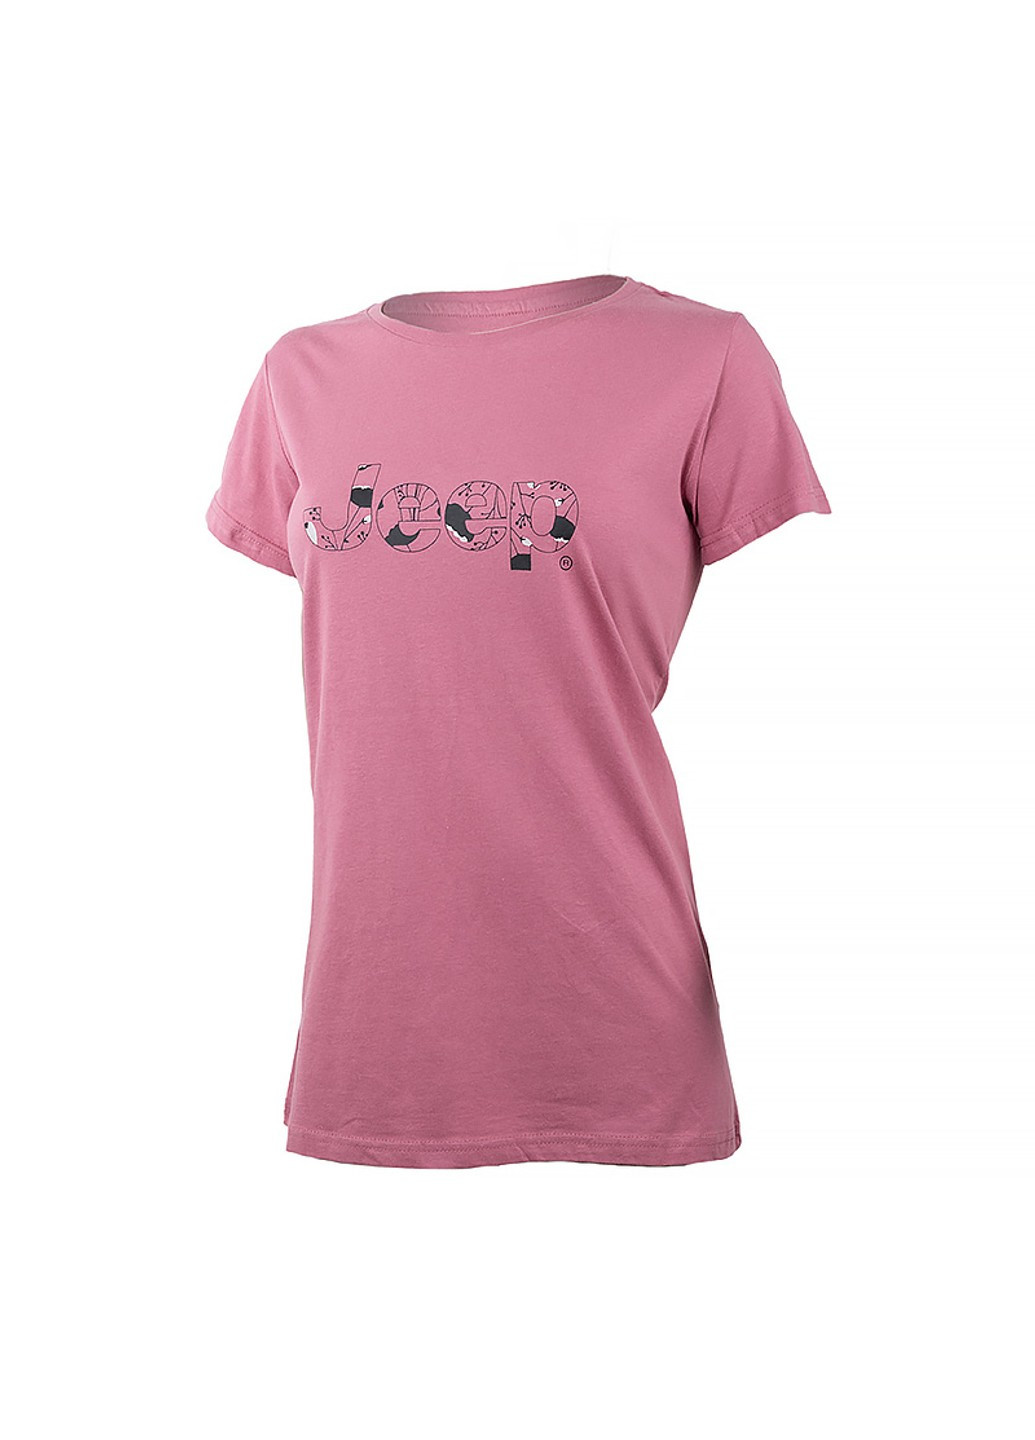 Розовая демисезон футболка t-shirt botanical print j22w Jeep